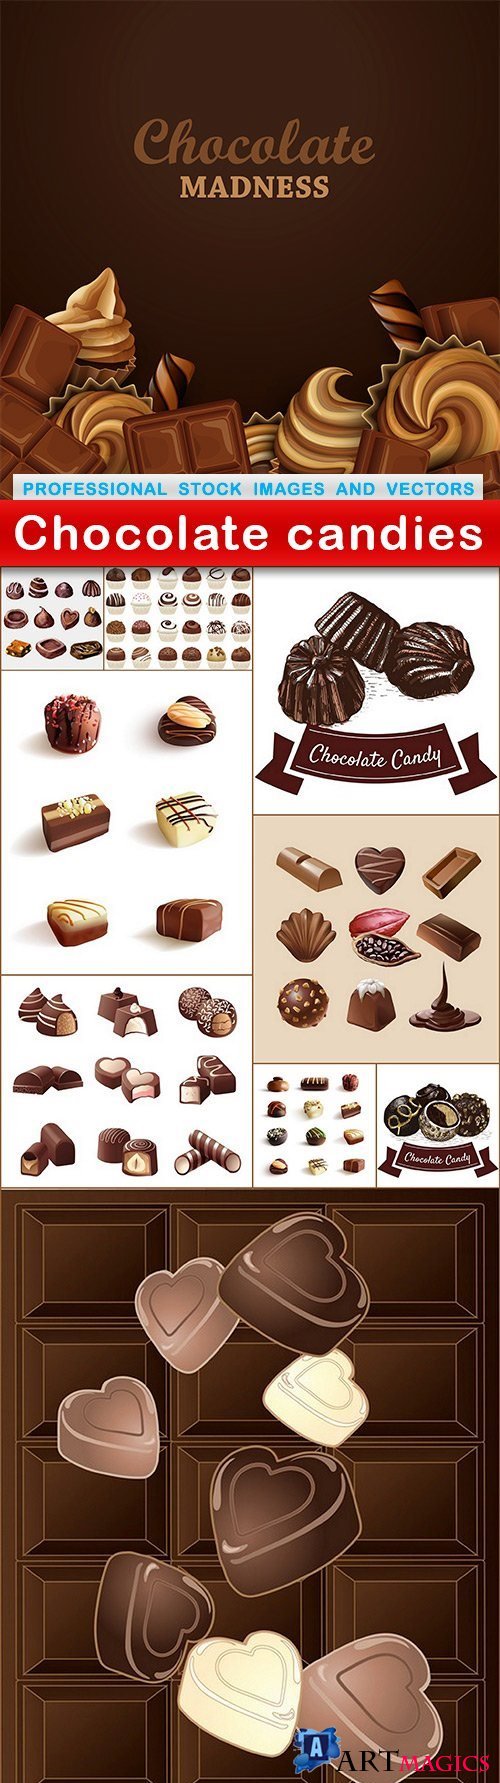 Chocolate candies - 10 EPS